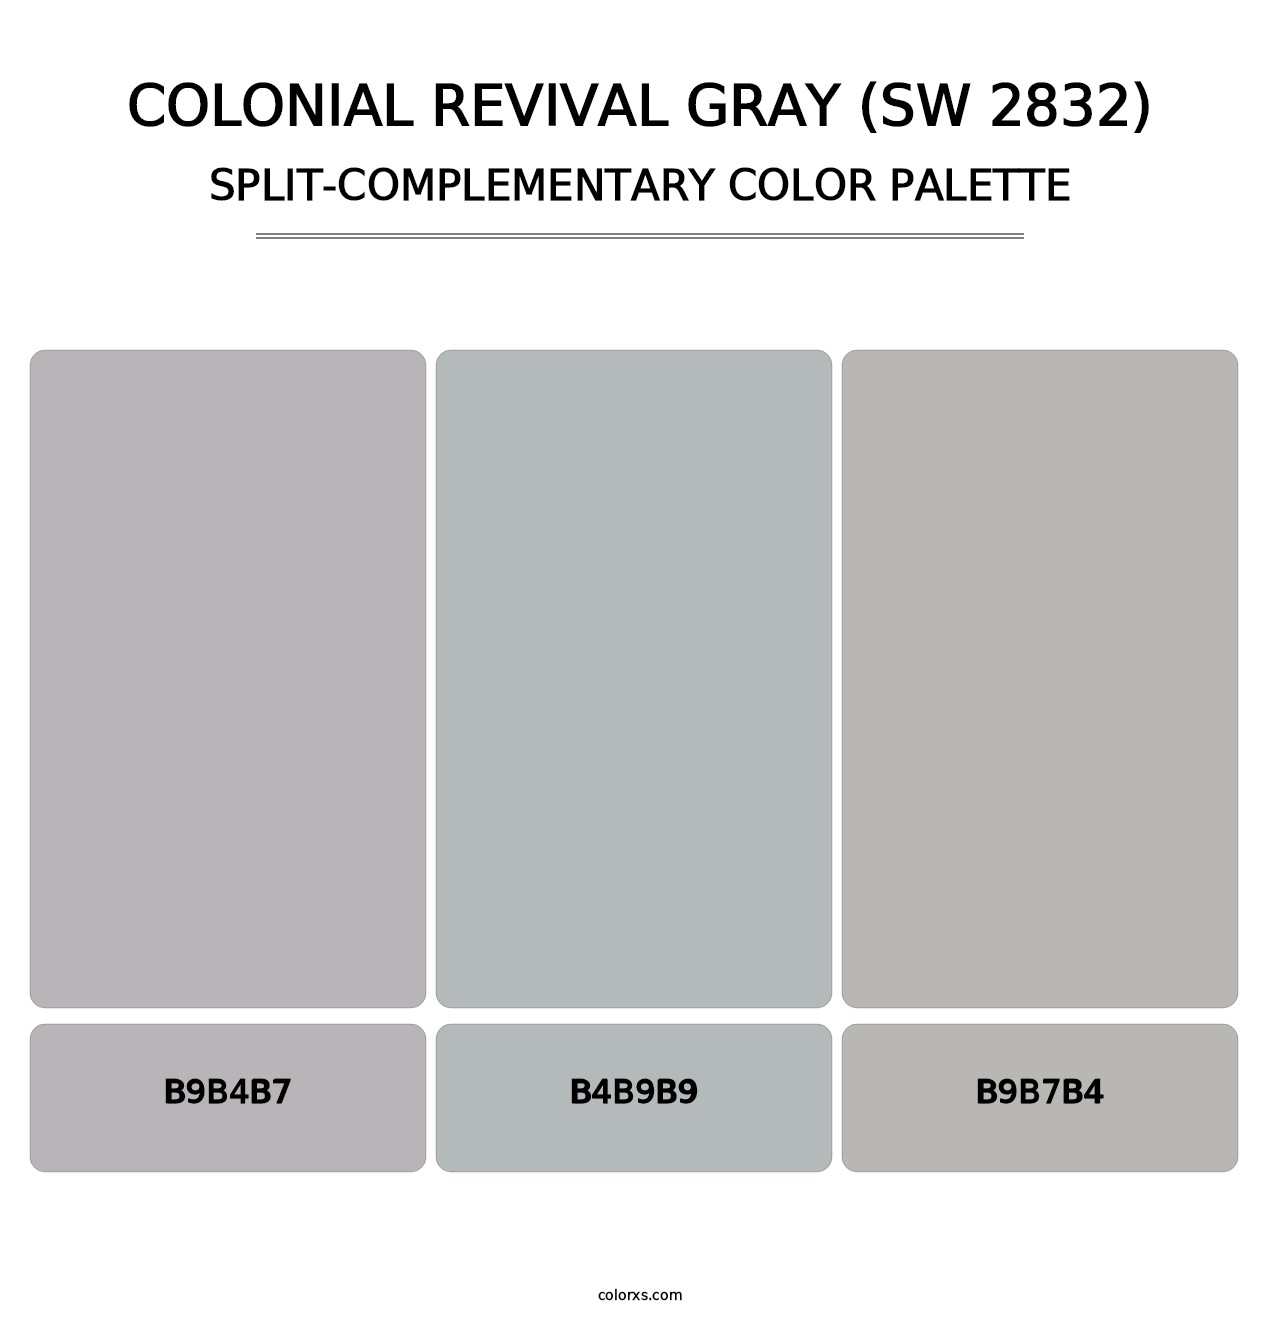 Colonial Revival Gray (SW 2832) - Split-Complementary Color Palette